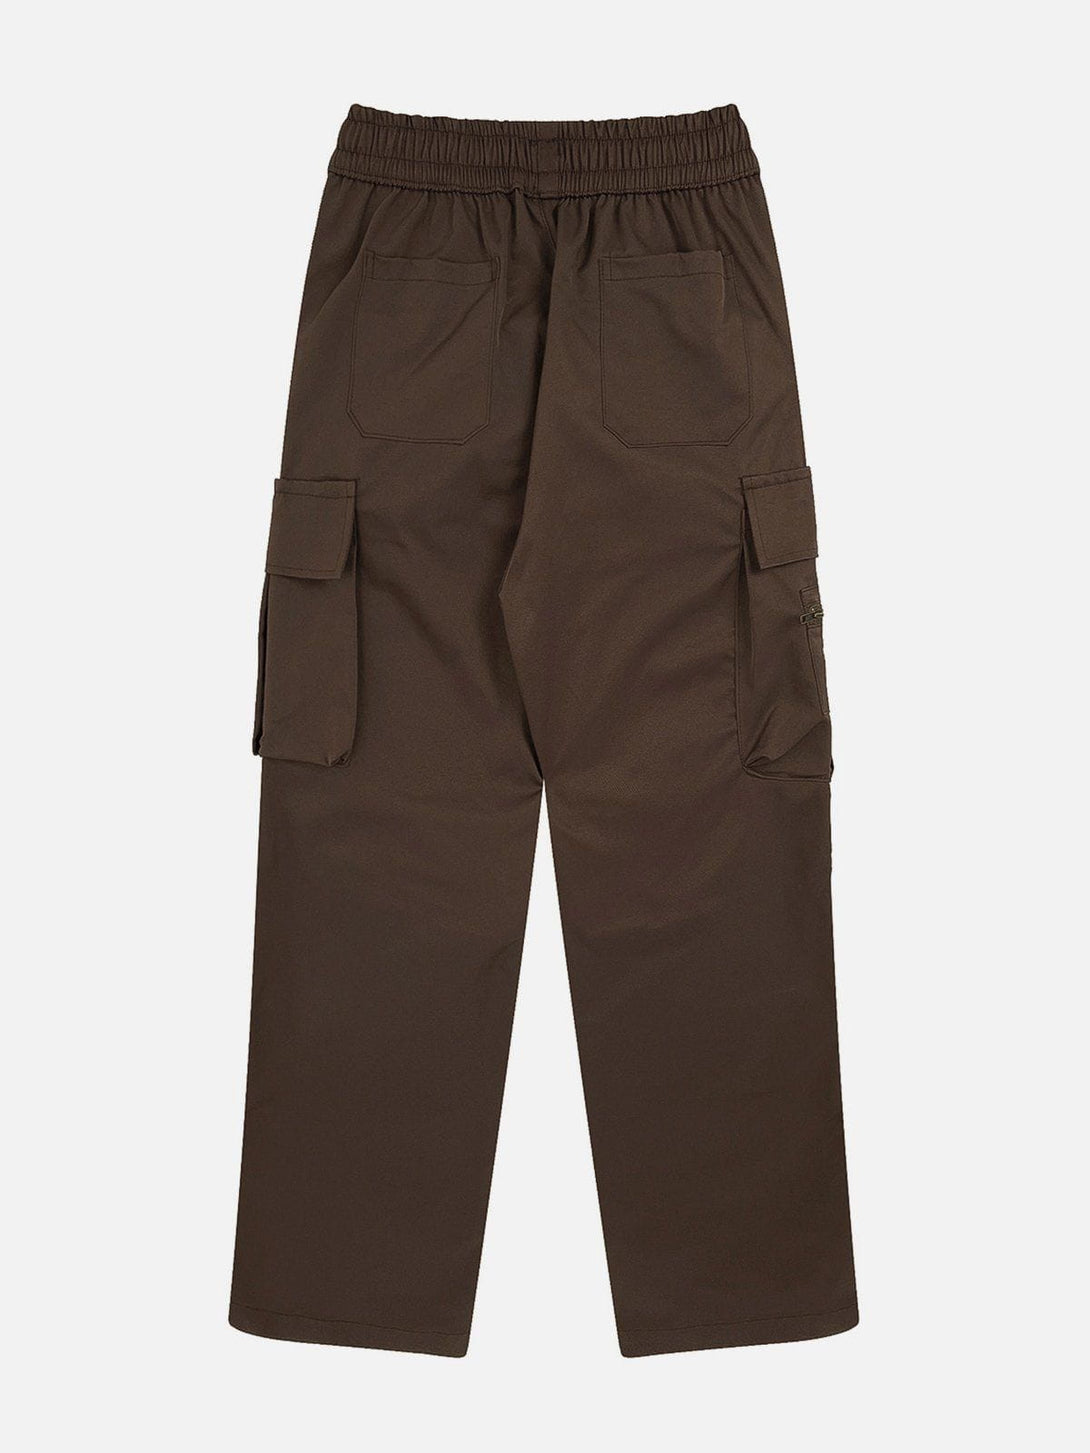 Majesda® - Large Pocket Pleated Cargo Pants outfit ideas streetwear fashion